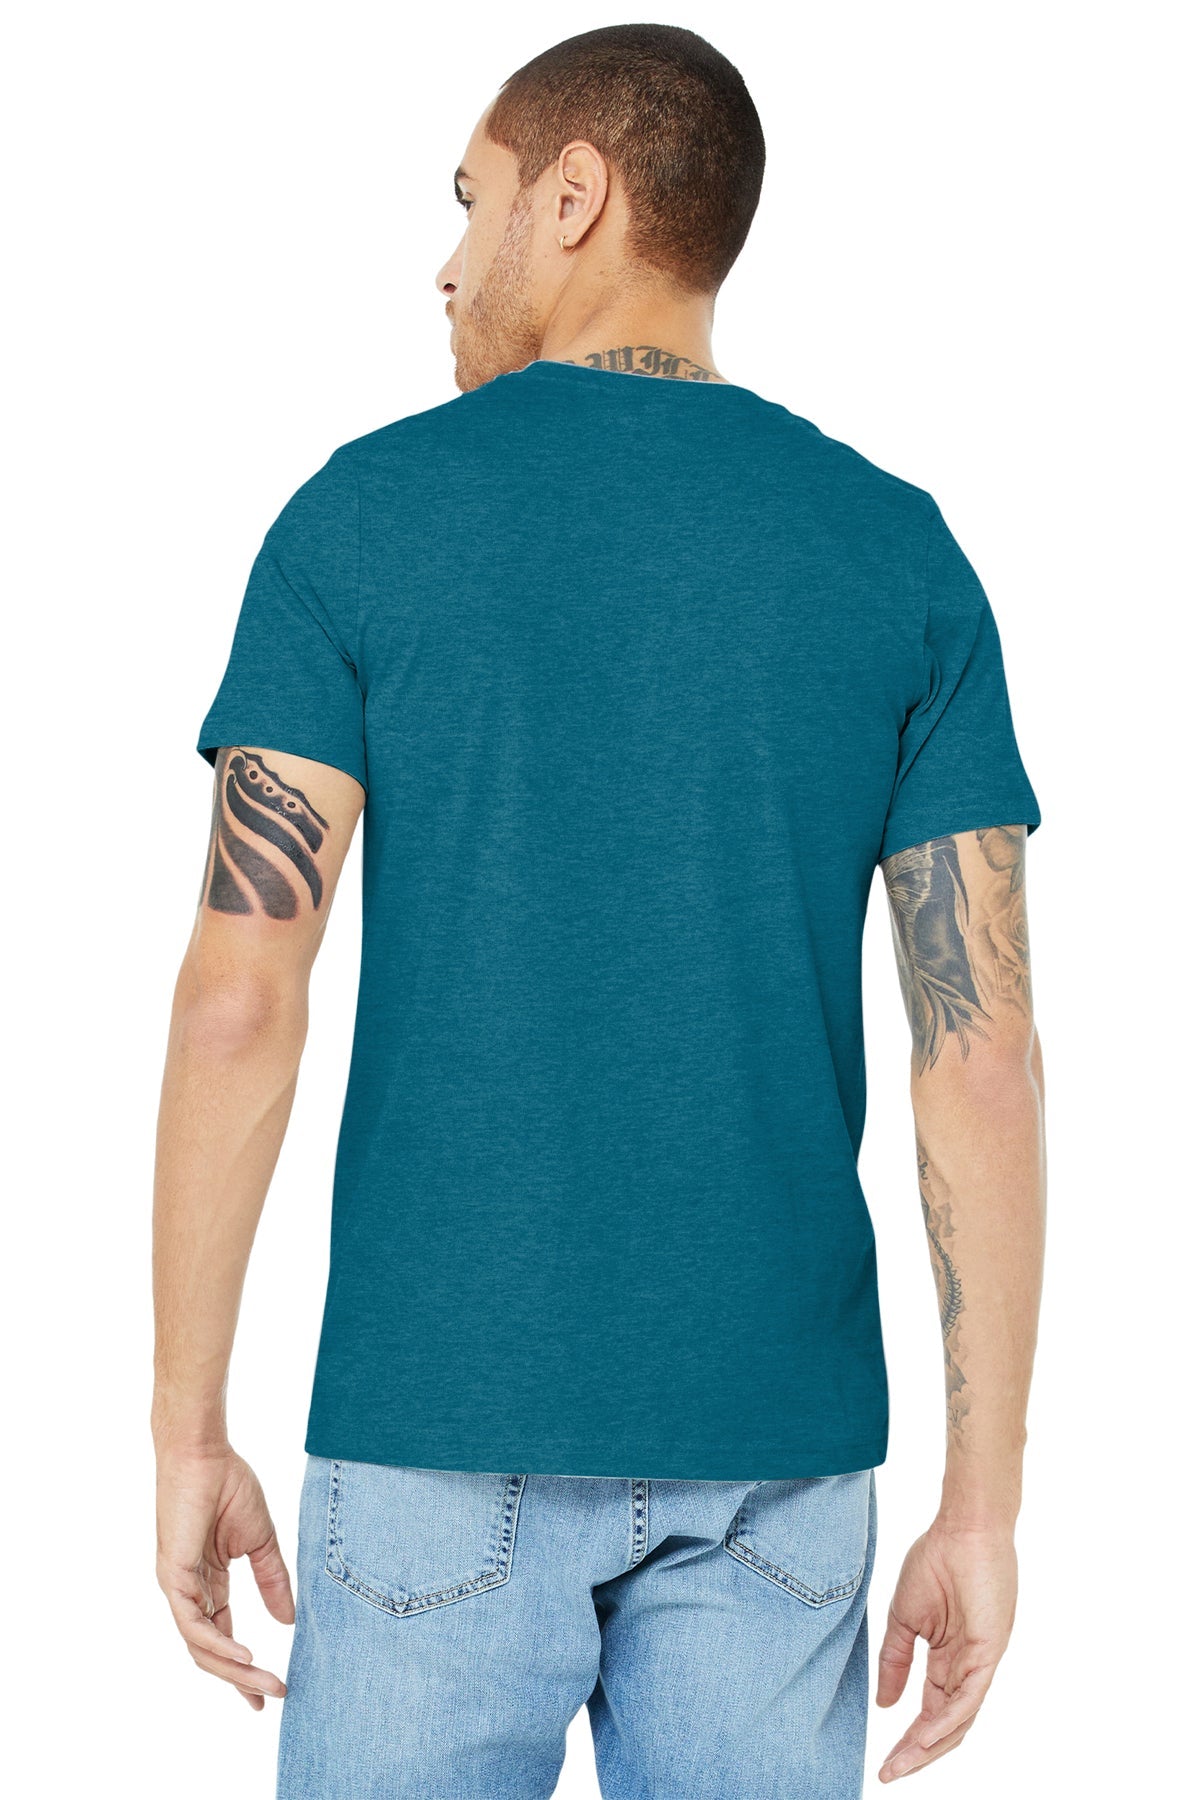 bella + canvas unisex jersey short sleeve t-shirt 3001c heathr deep teal